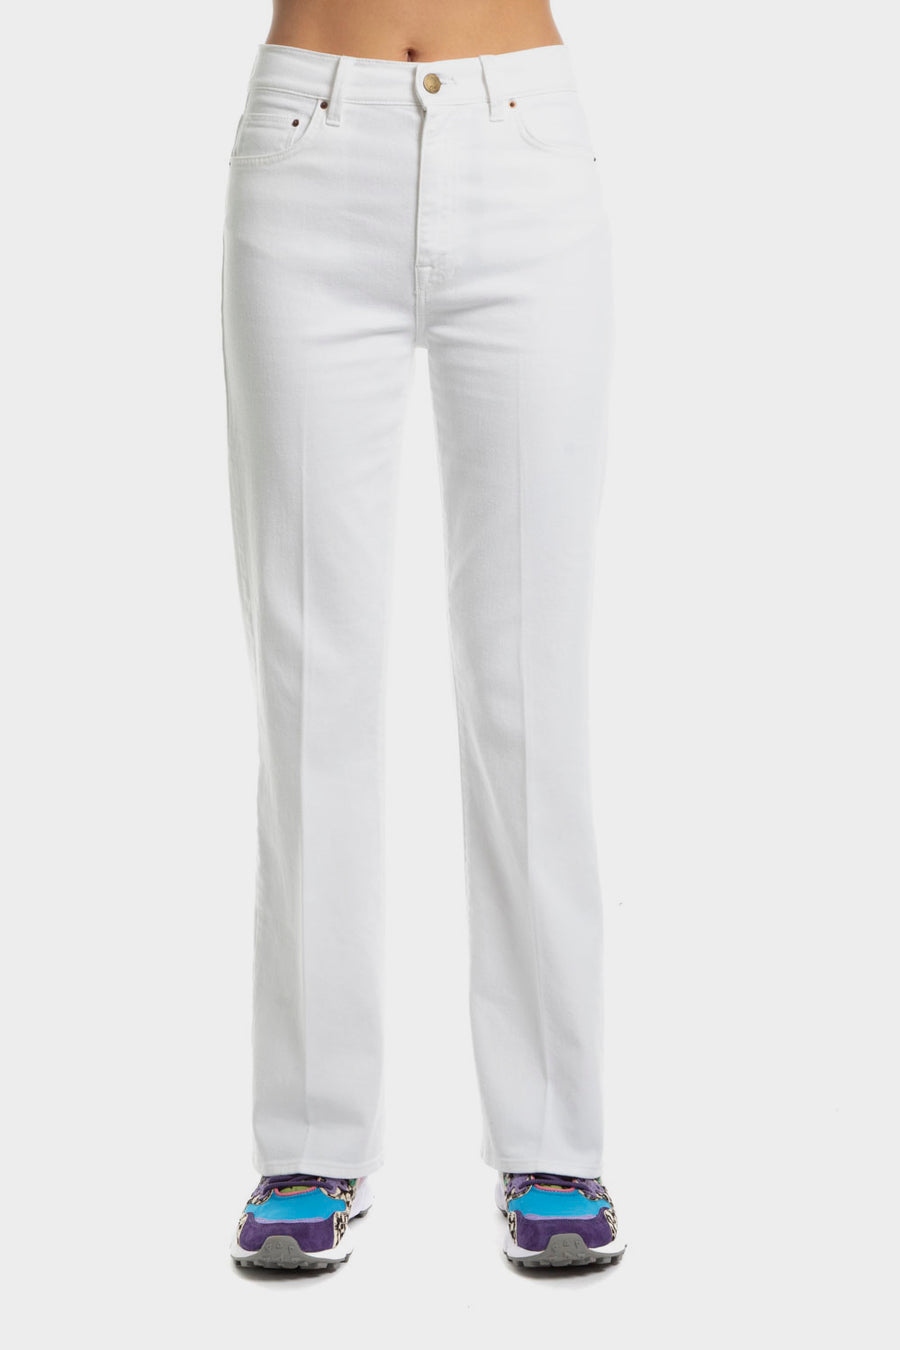 Pantalone Jeans PS bianco kate